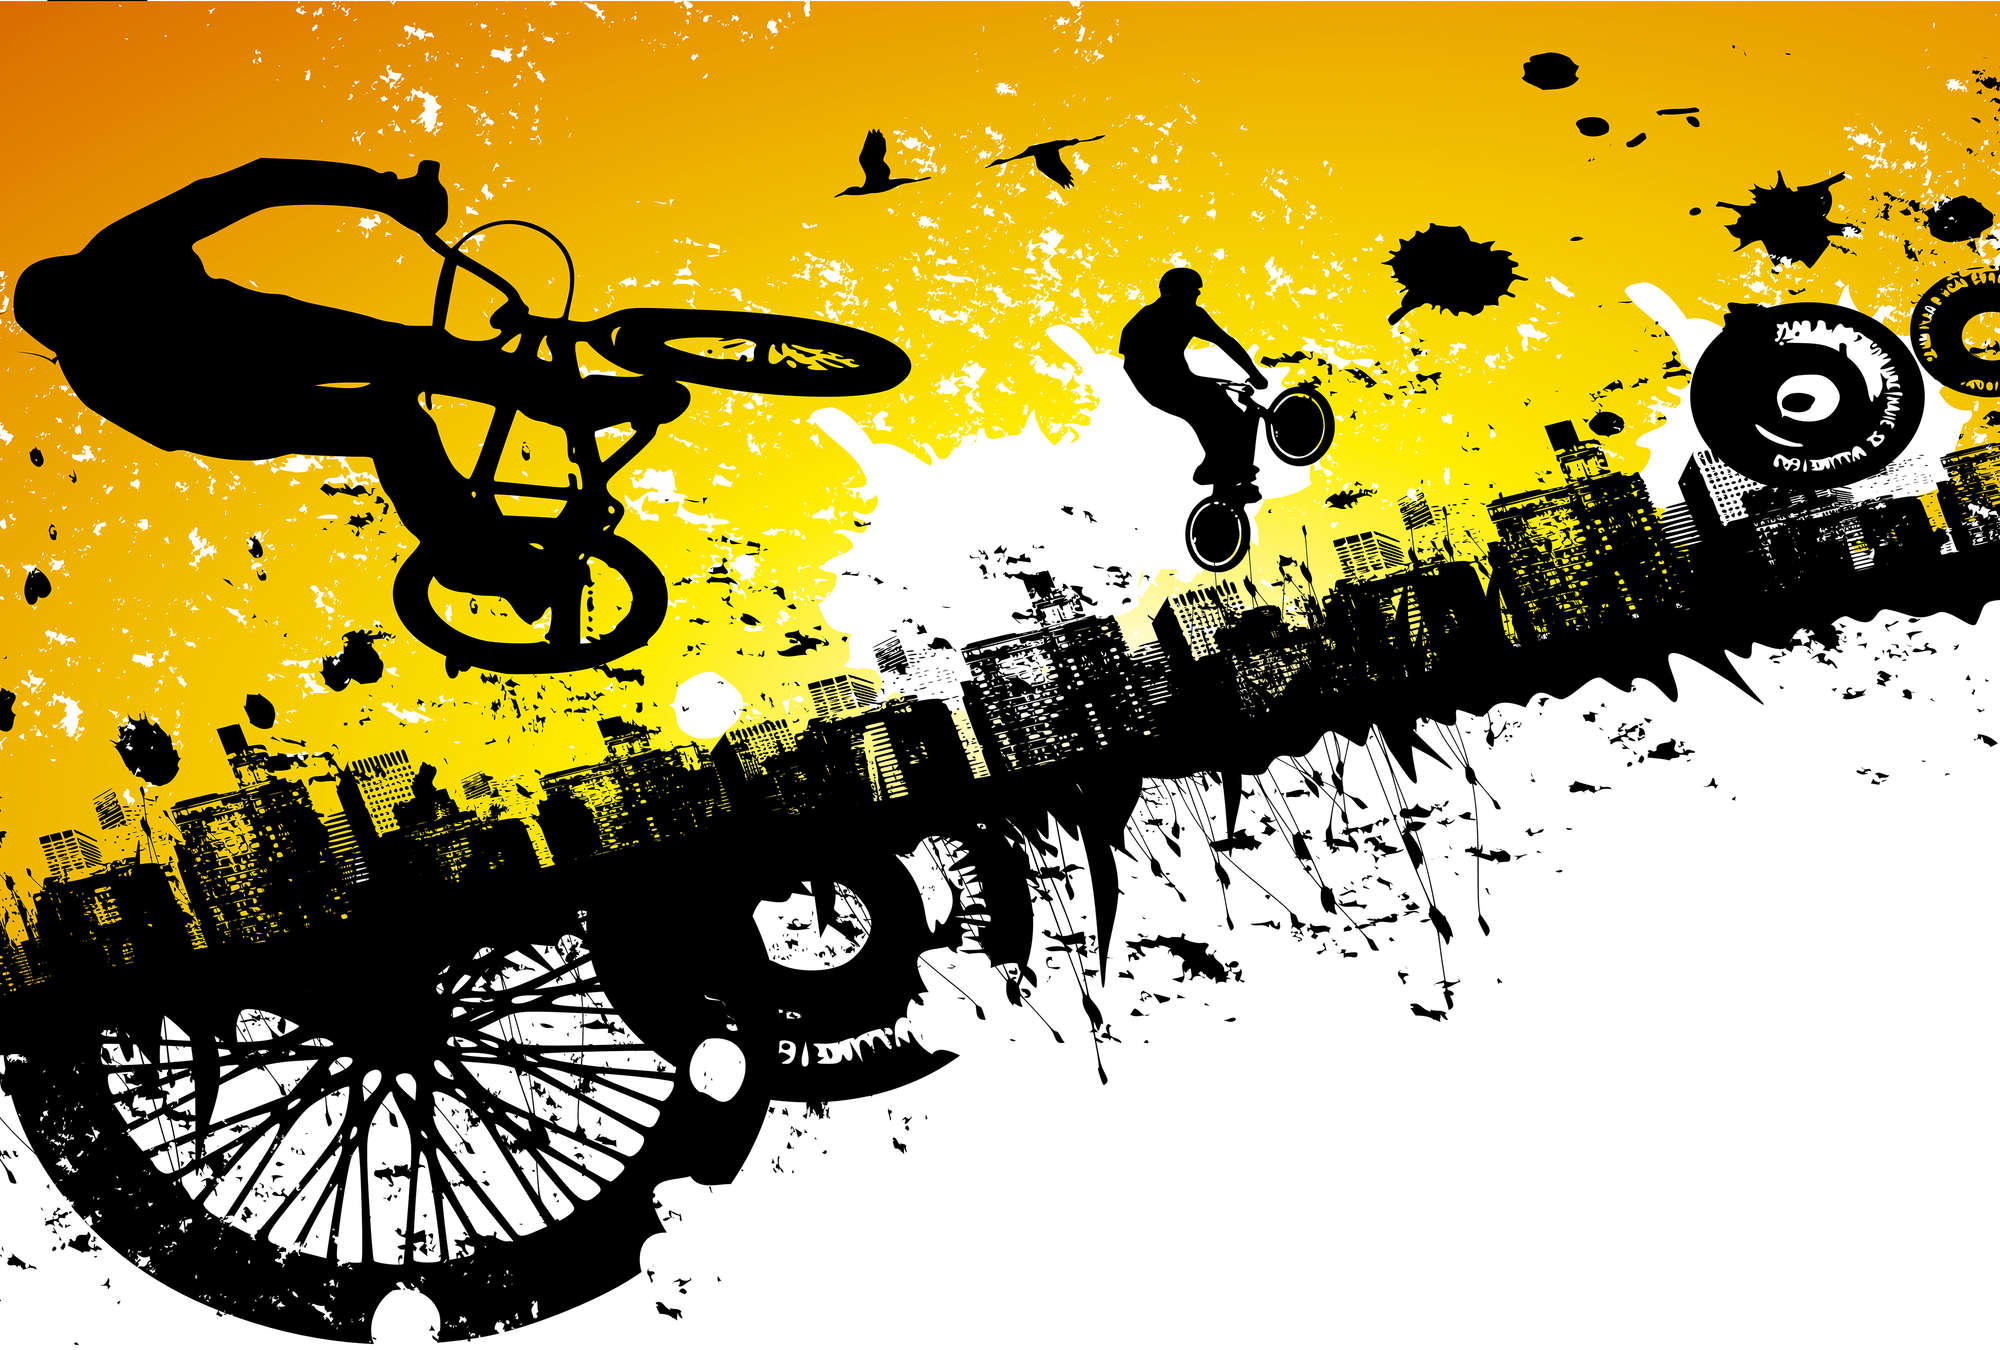             Graffiti behang BMX rijder met skyline op parelmoer glad vlies
        